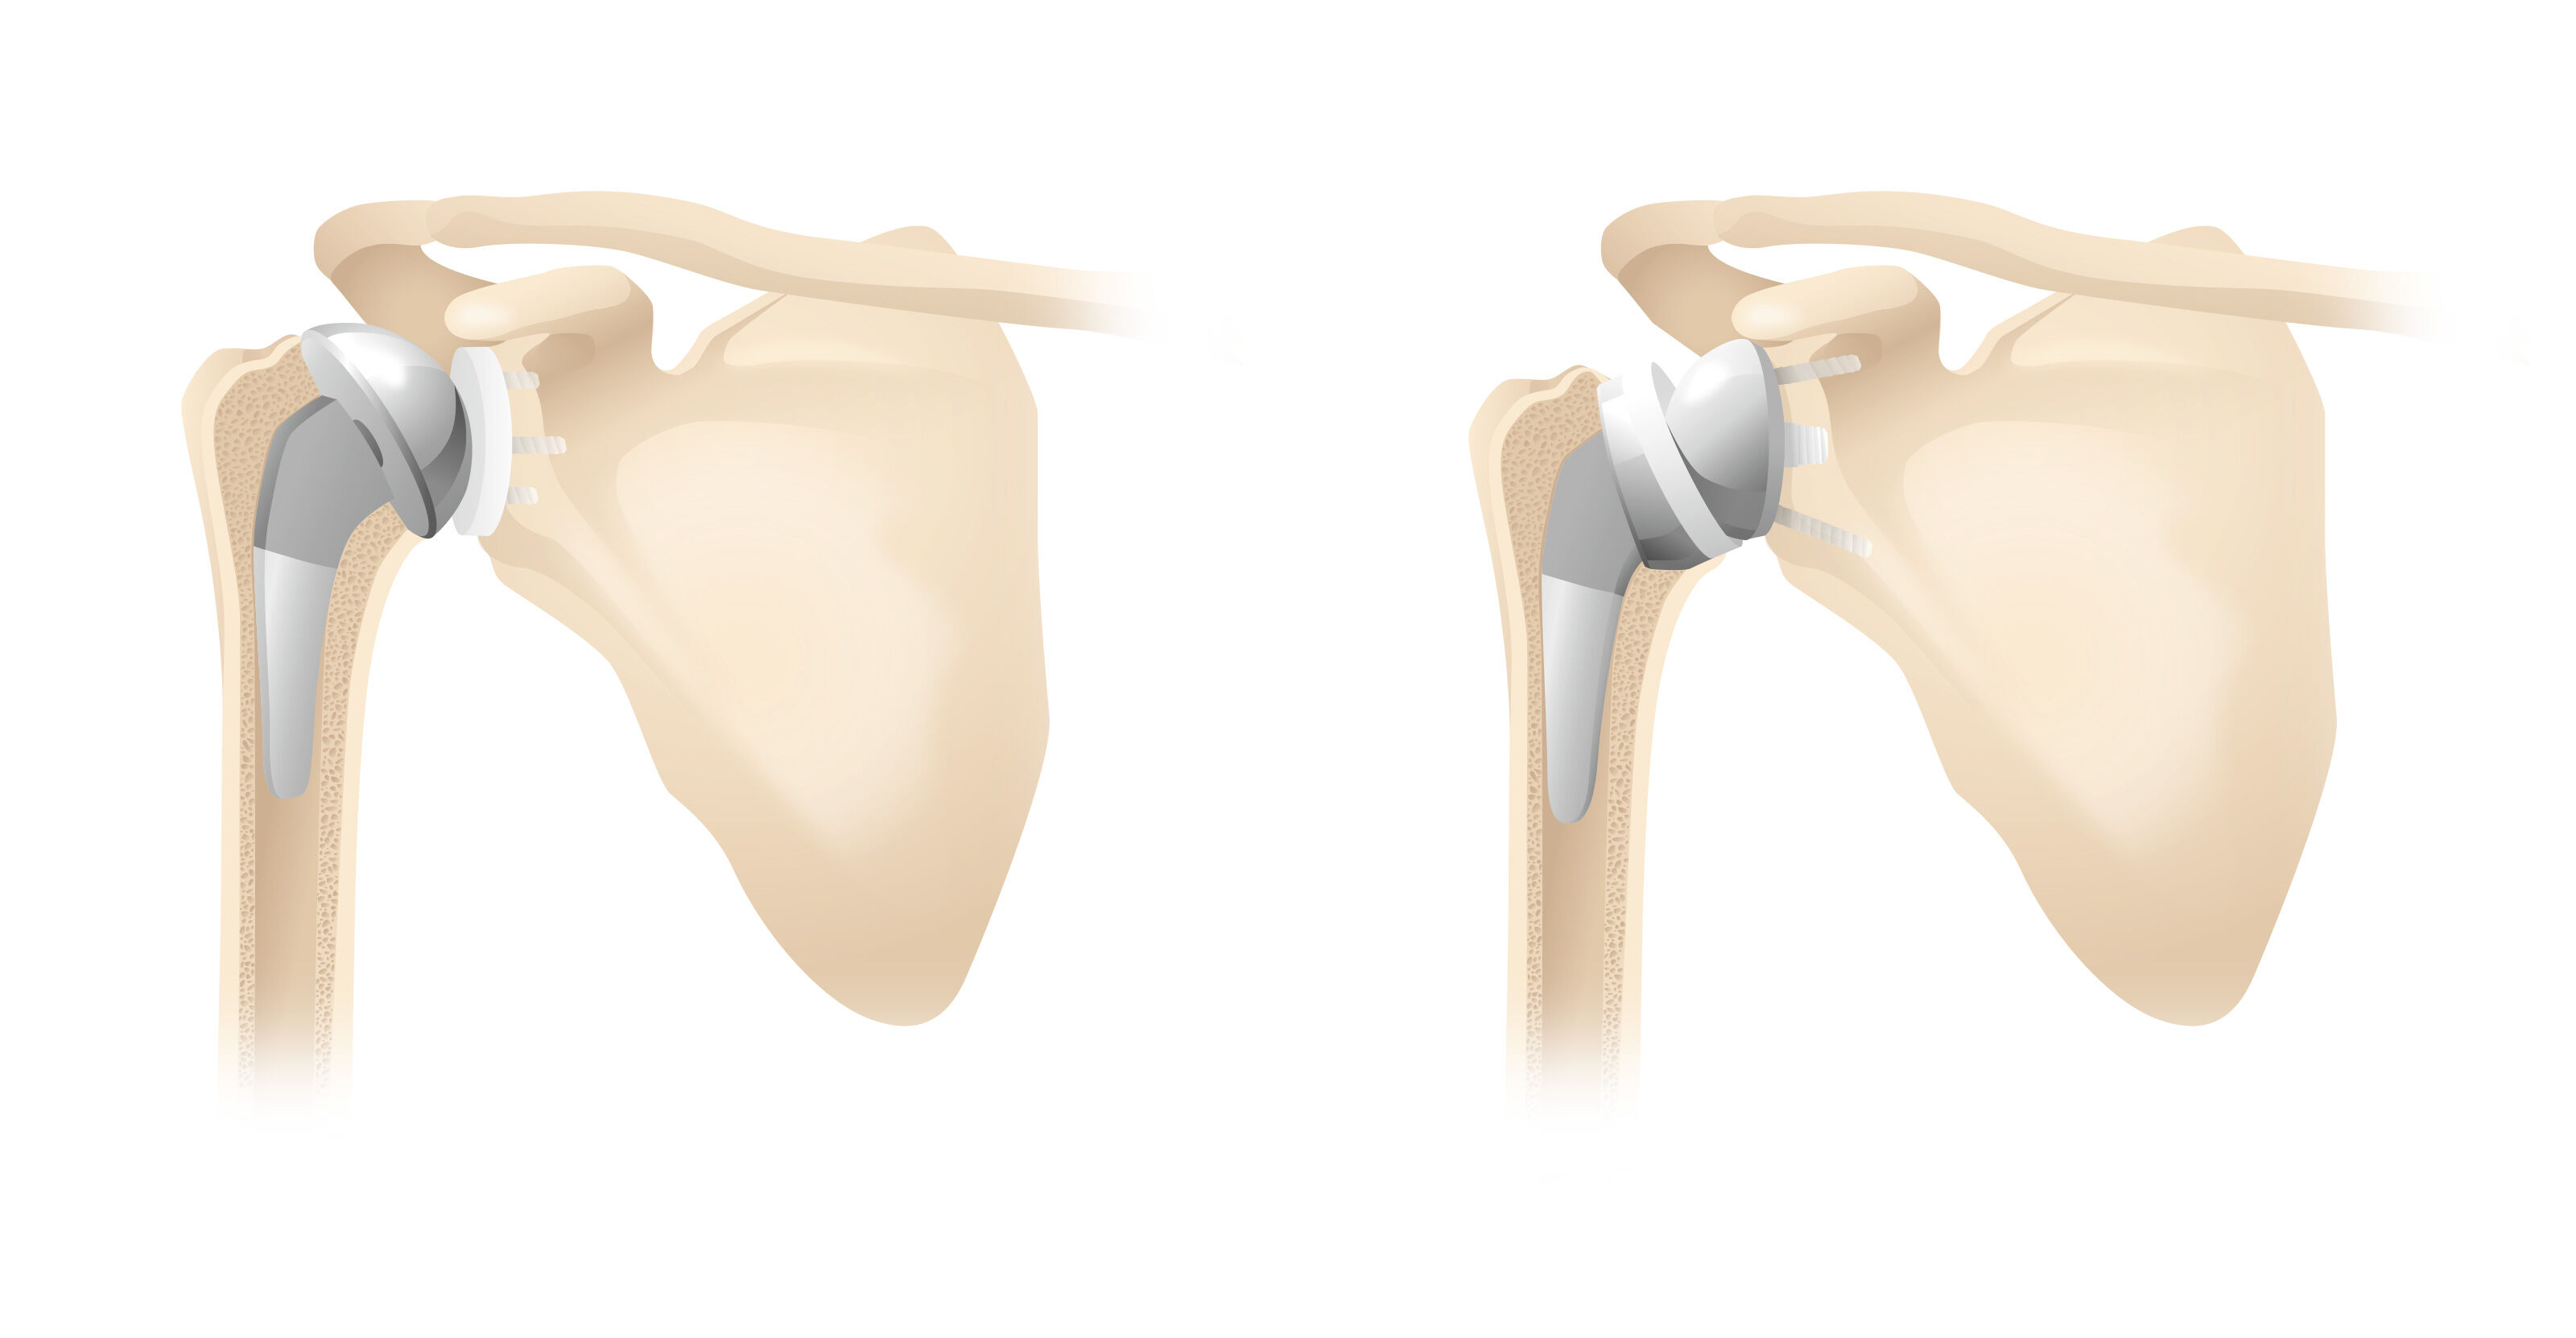 oculus-illustration-medizin-gelenkchirurgie-schulter-prothese